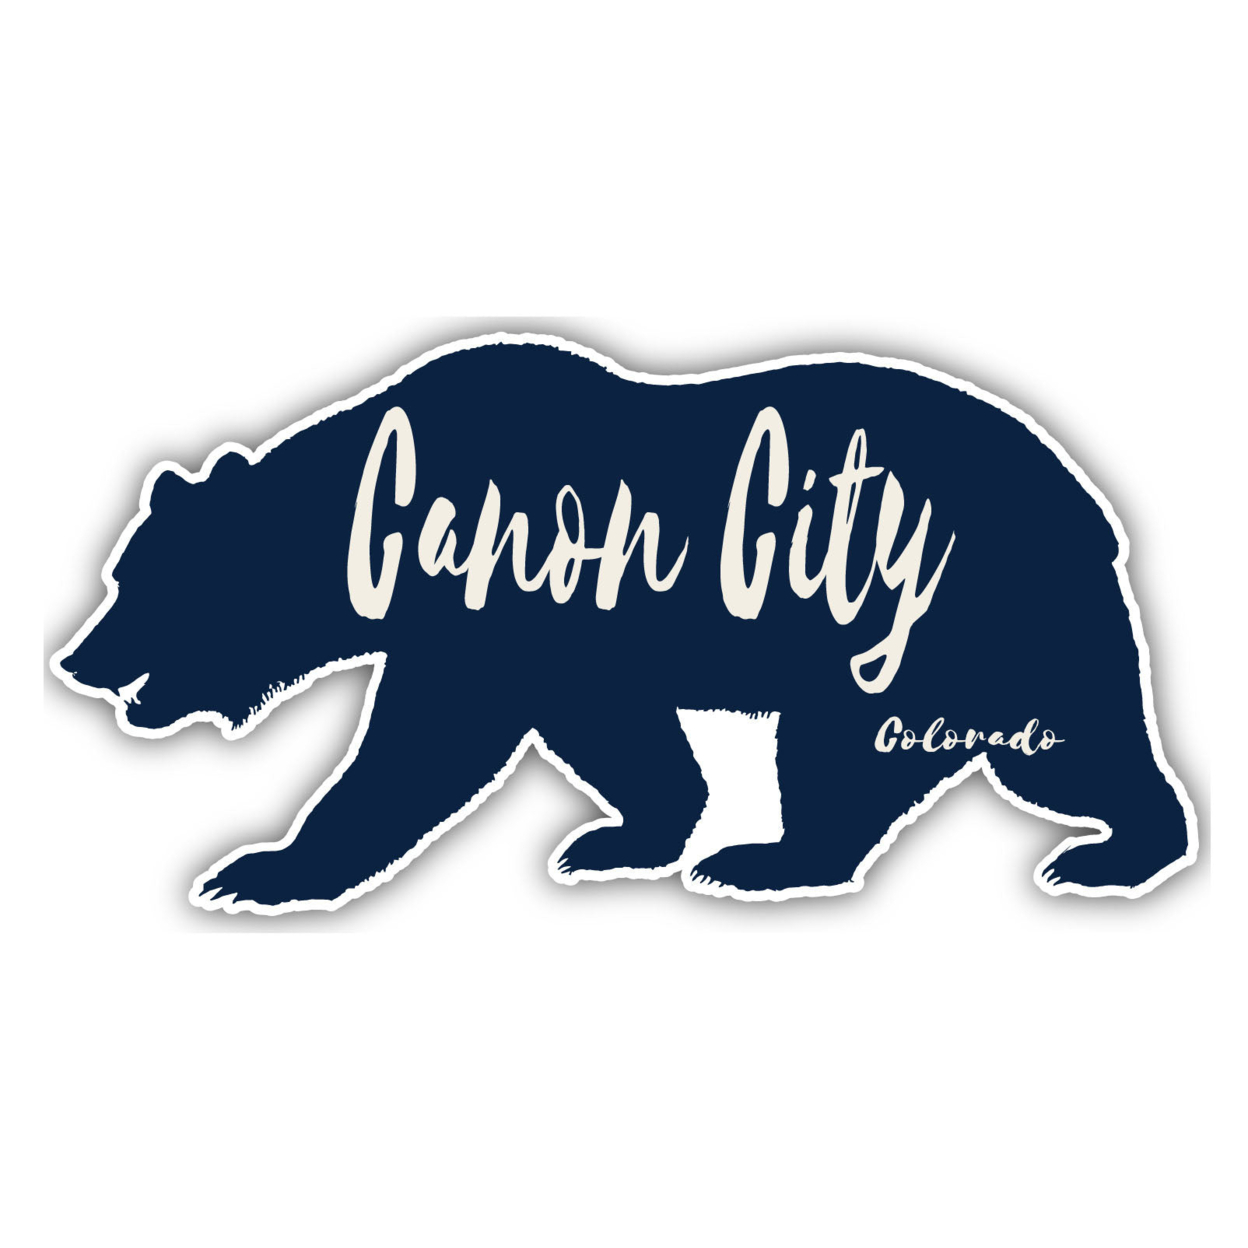 Canon City Colorado Souvenir Decorative Stickers (Choose Theme And Size) - Single Unit, 2-Inch, Tent